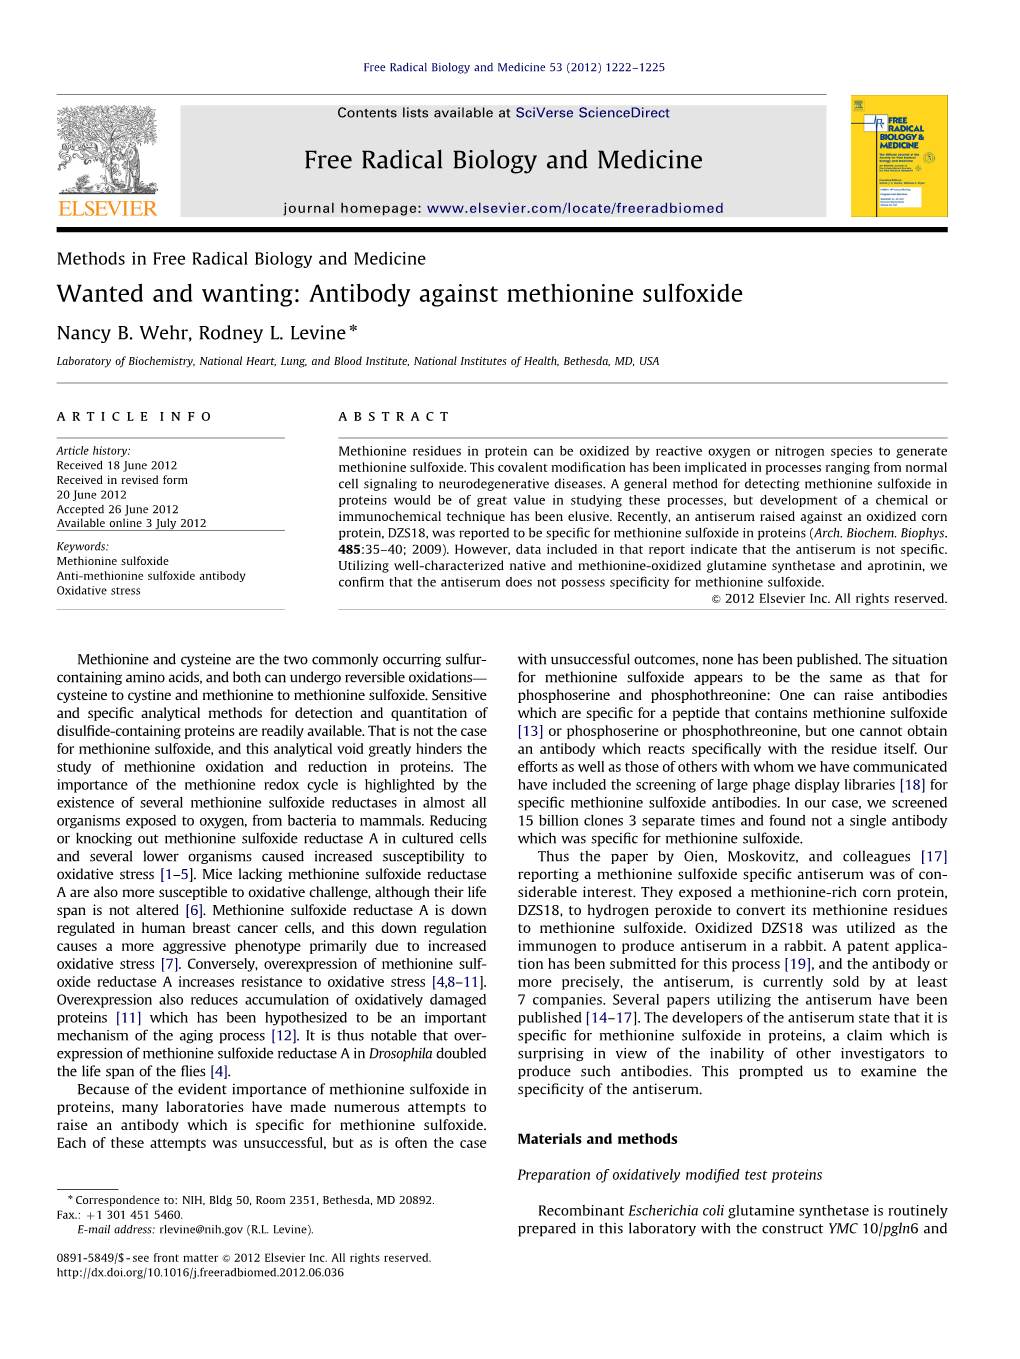 Antibody Against Methionine Sulfoxide